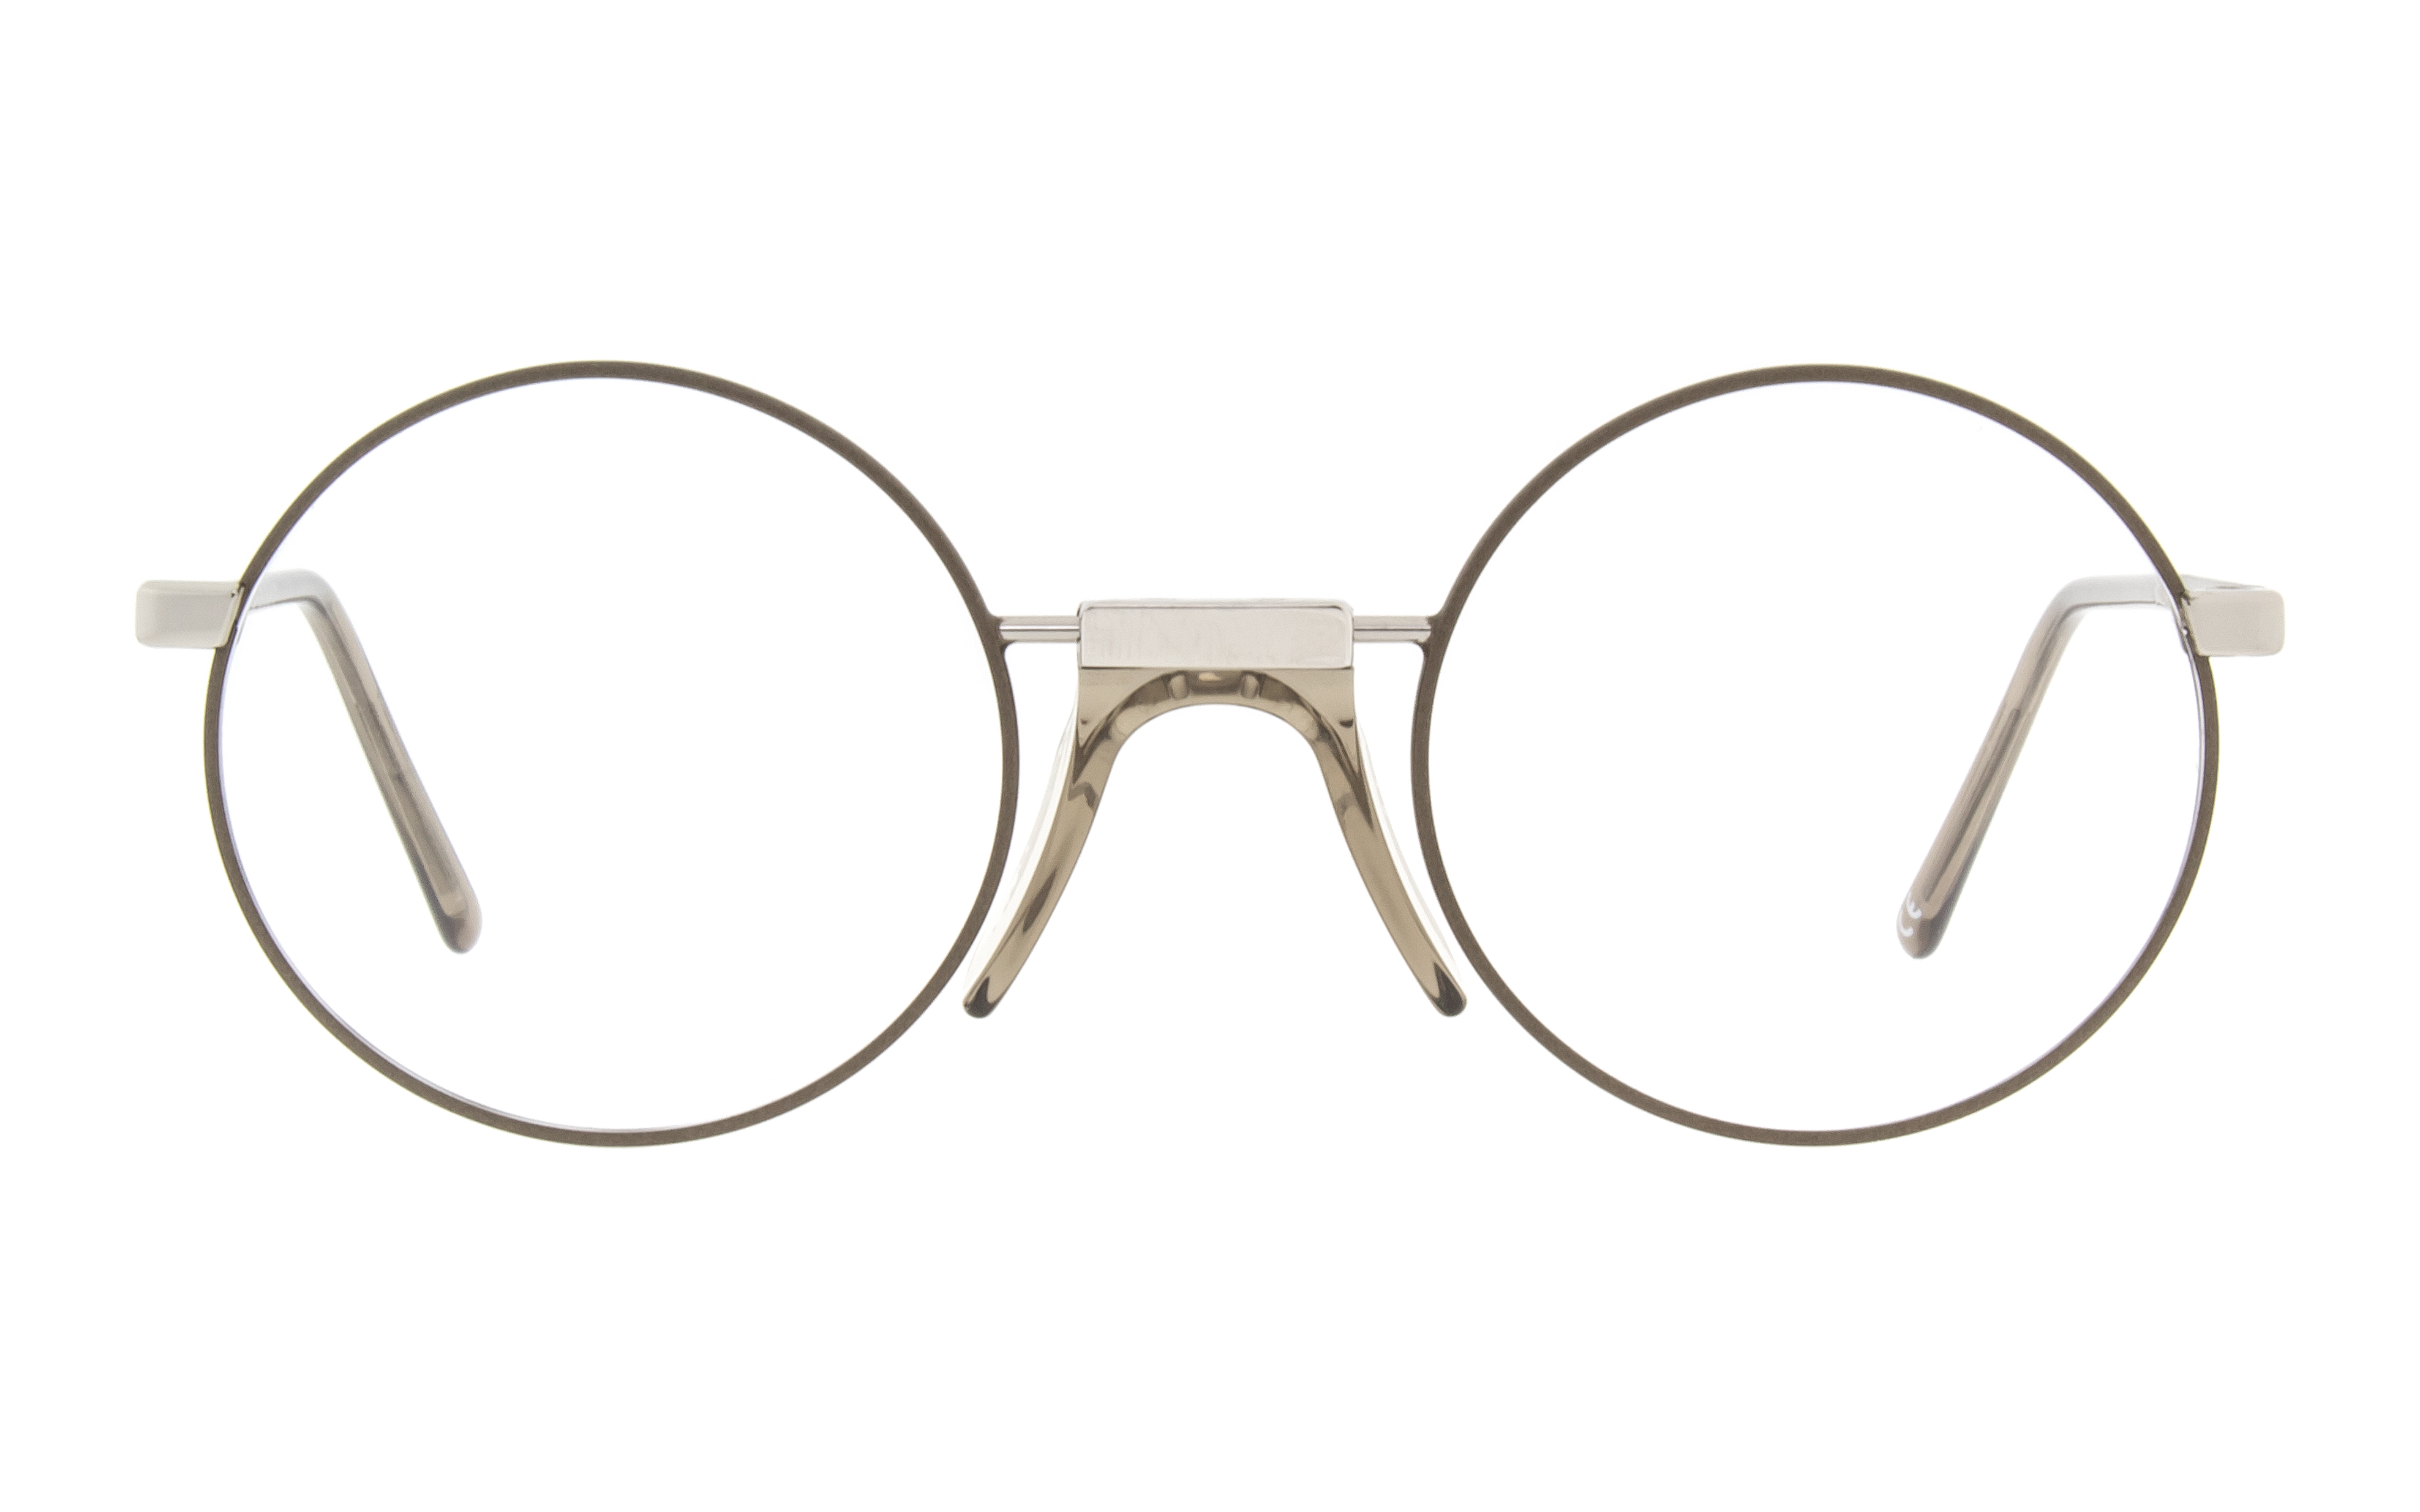 Sabol by Andy Wolf Eyewear and Eyeglasses